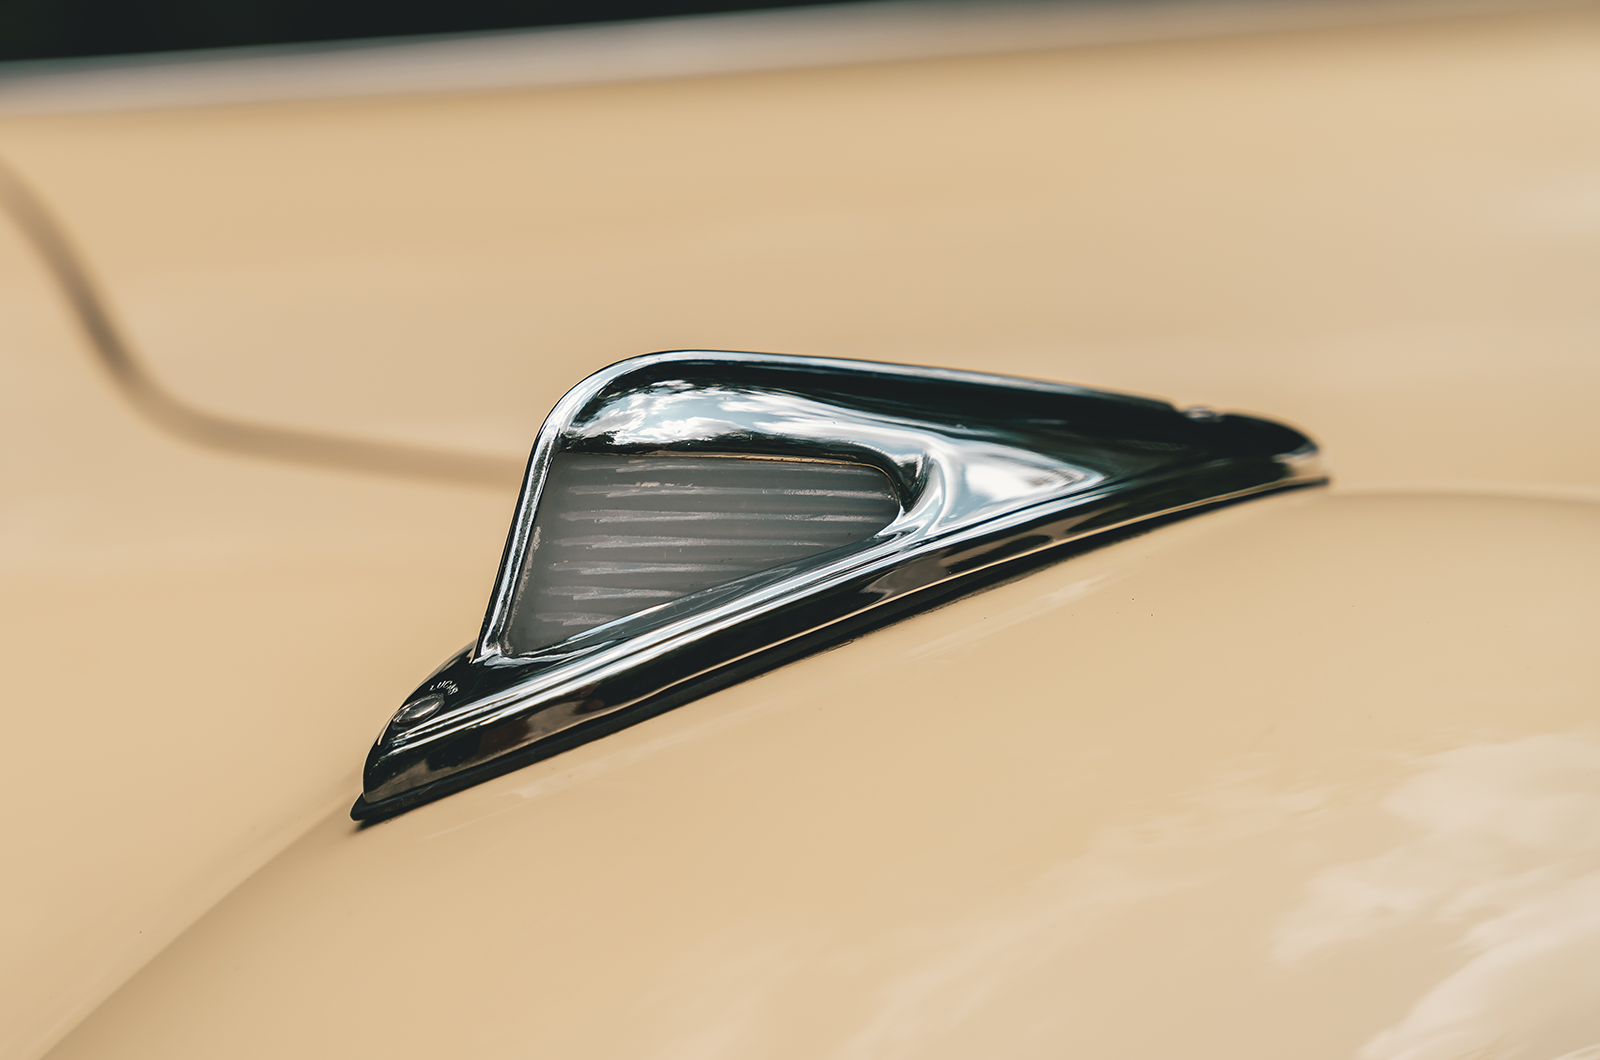 Classic & Sports Car – Bristol 400 drophead coupé: open season